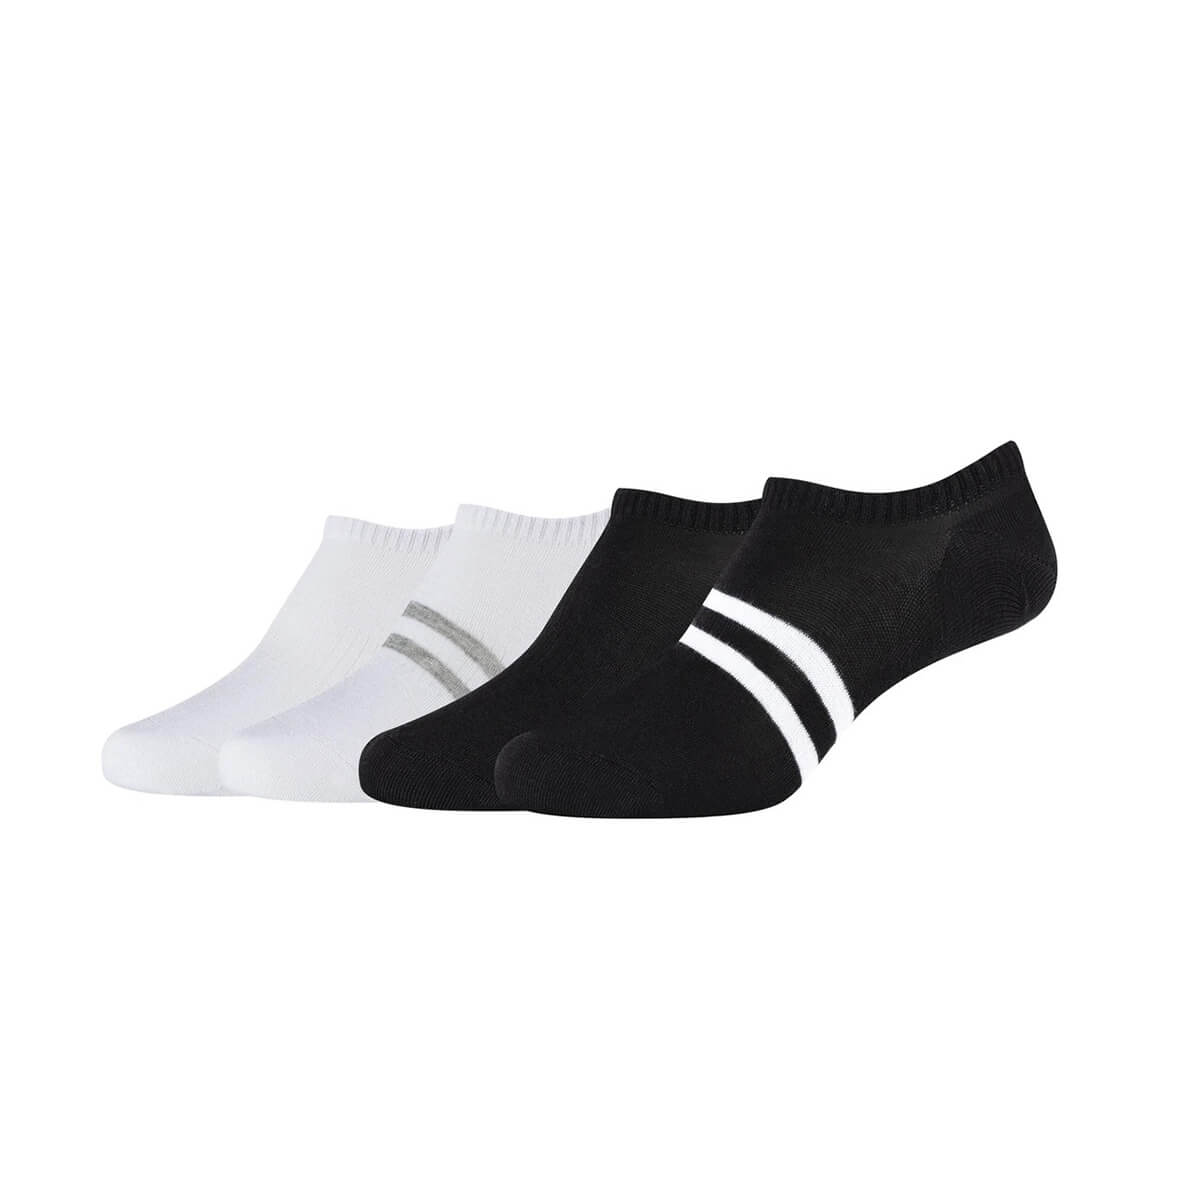 ▷ Order socks for 6 – Sockstock® online – branded Page women